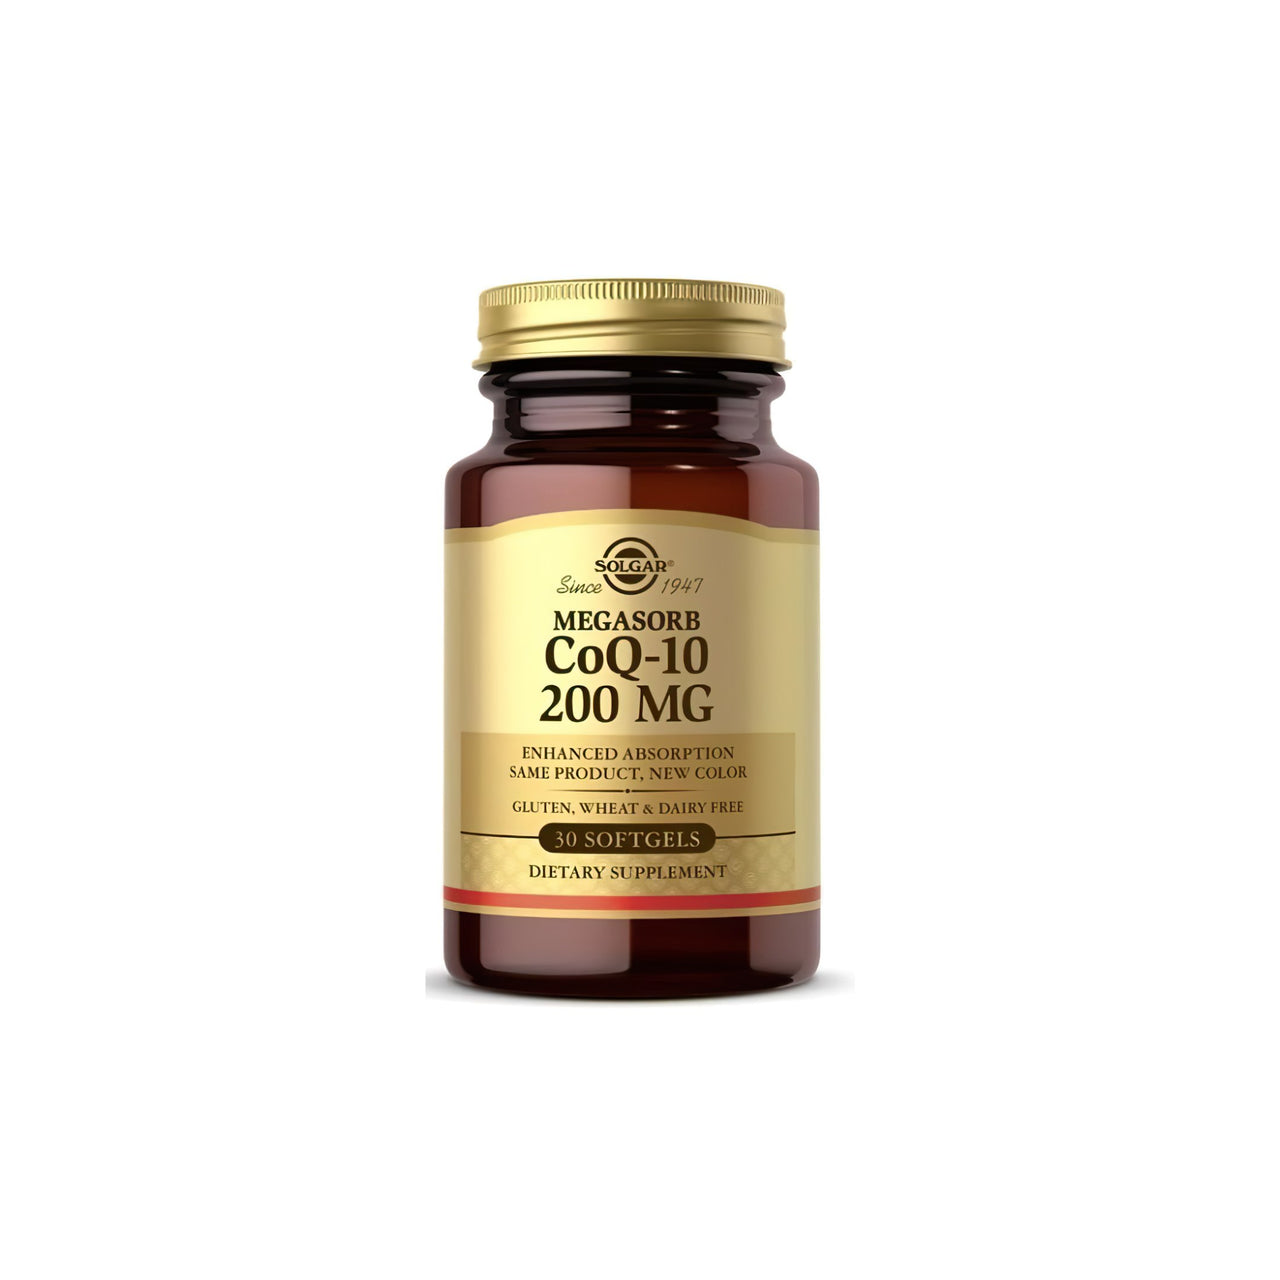 A bottle of Solgar Megasorb CoQ-10 200 mg 30 Softgels on a white background.